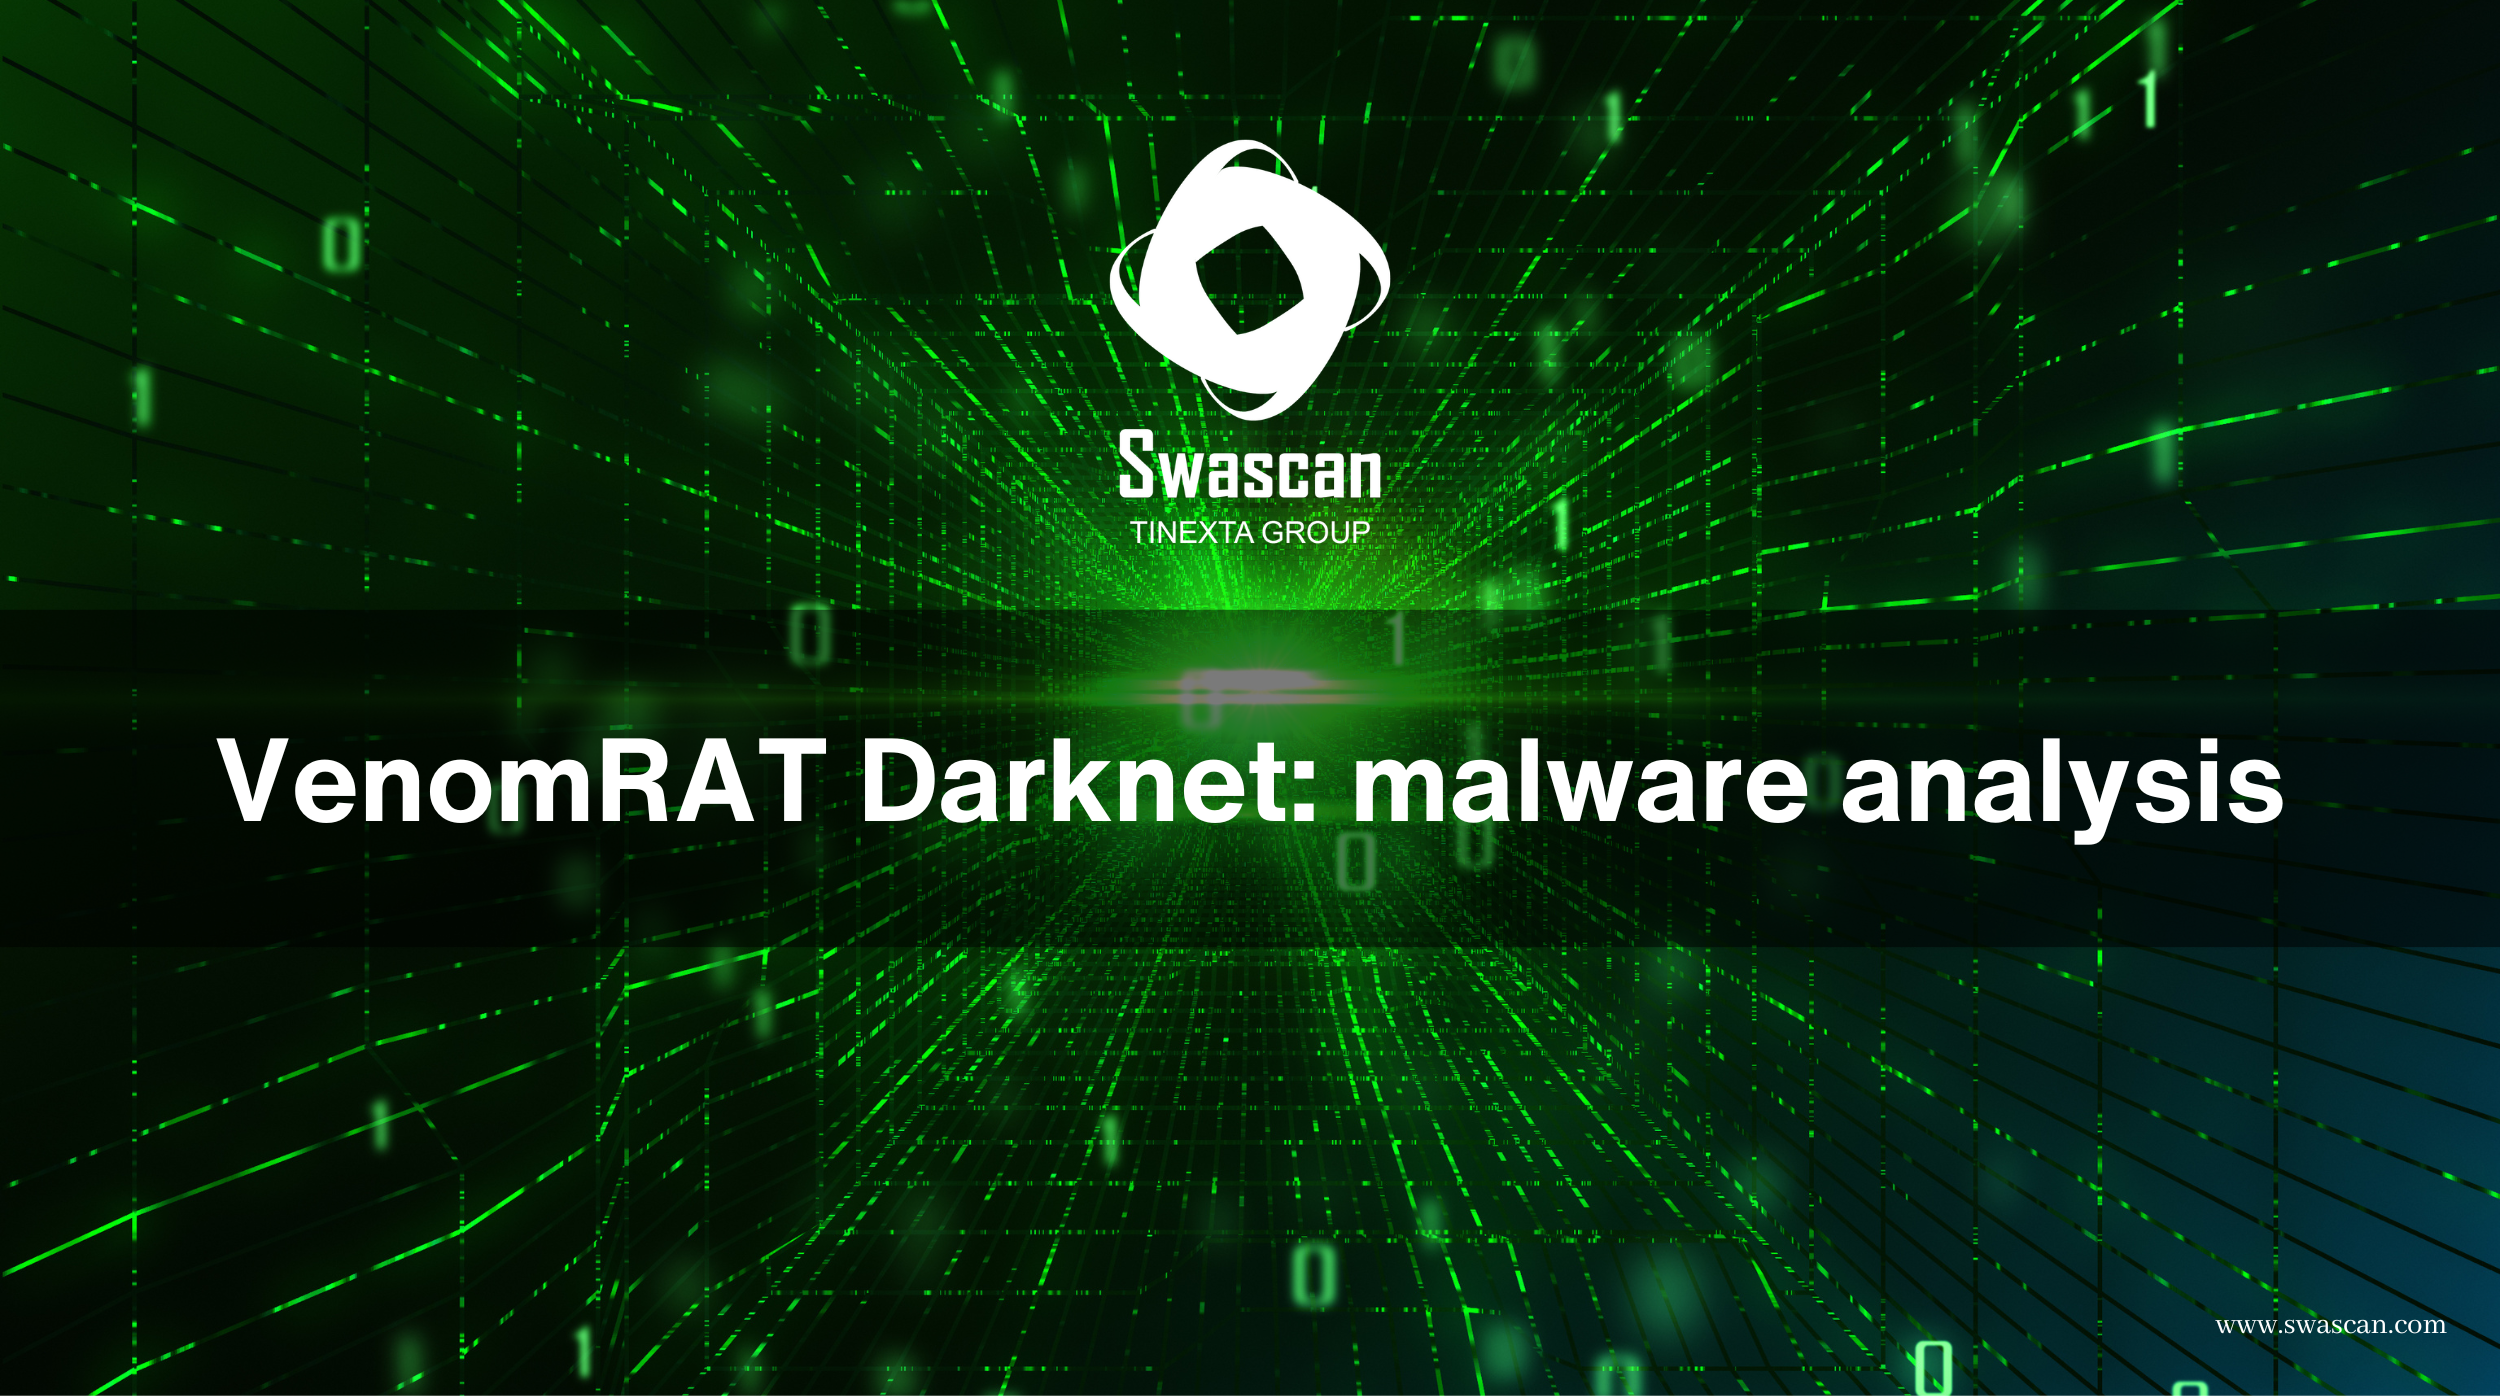 VenomRAT Darknet: malware analysis 